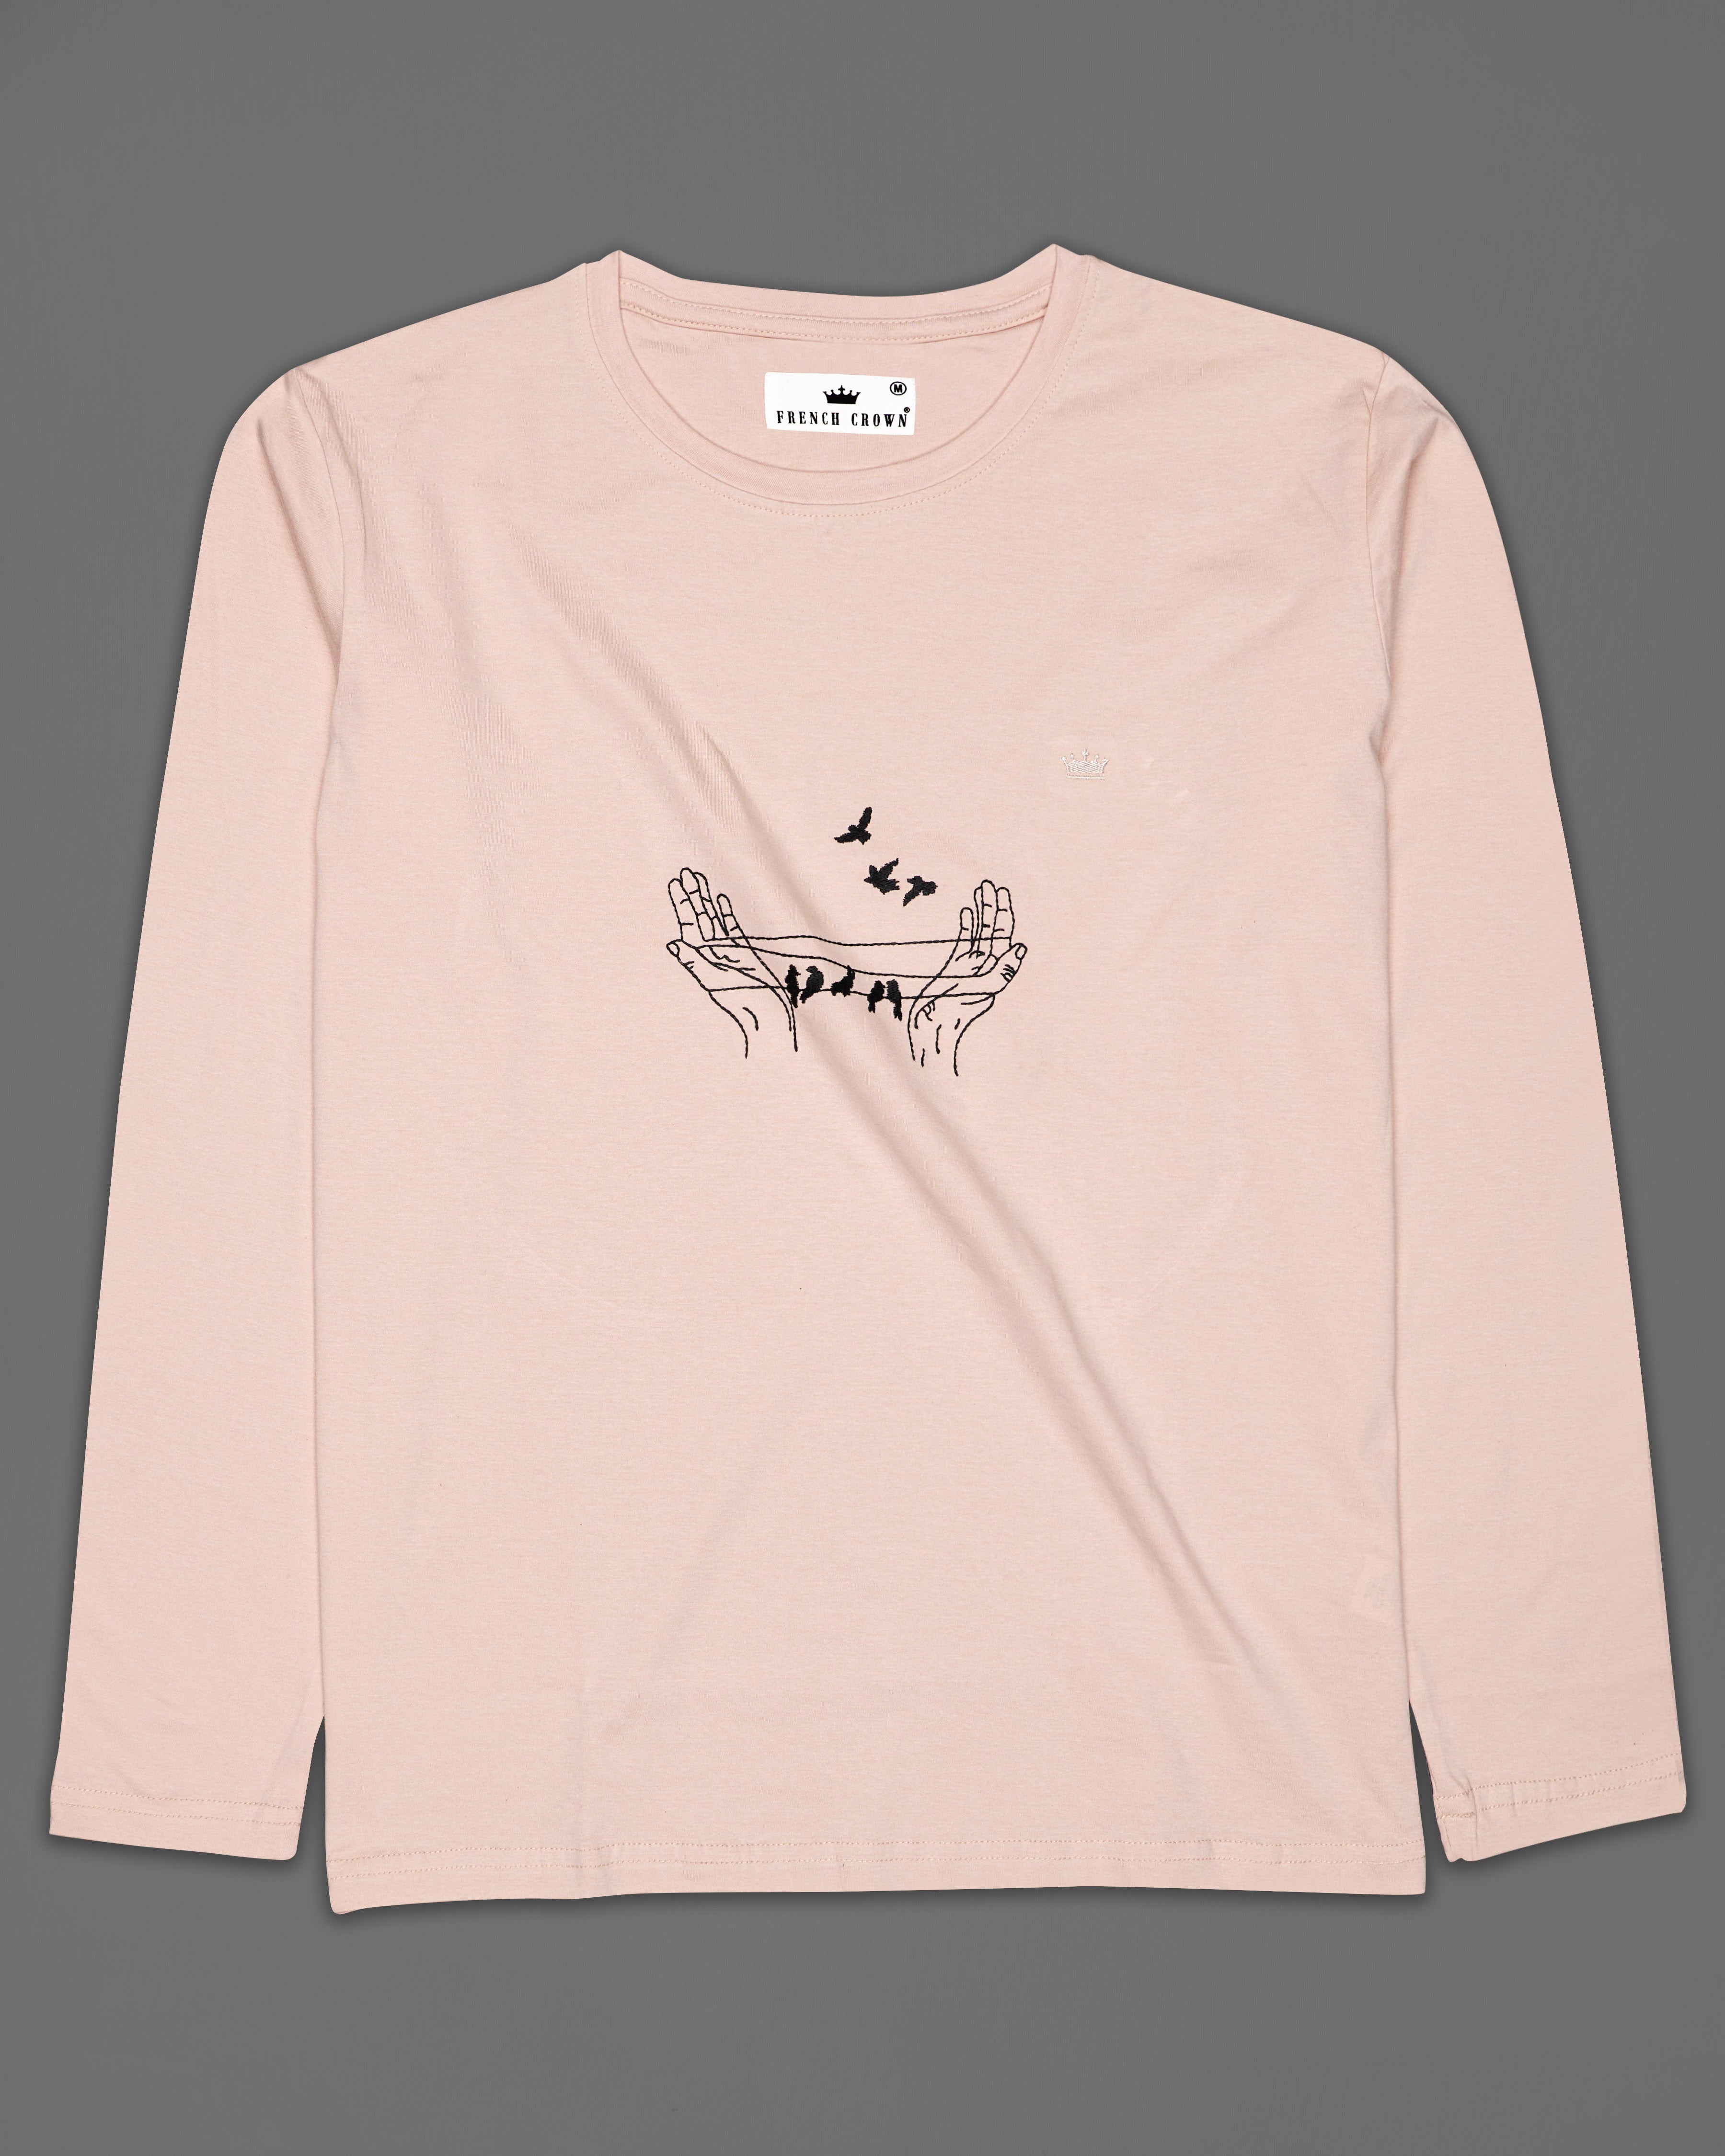 Watusi Cream with Black Embroidered Premium Cotton T-shirt TS082-W03-S, TS082-W03-M, TS082-W03-L, TS082-W03-XL, TS082-W03-XXL